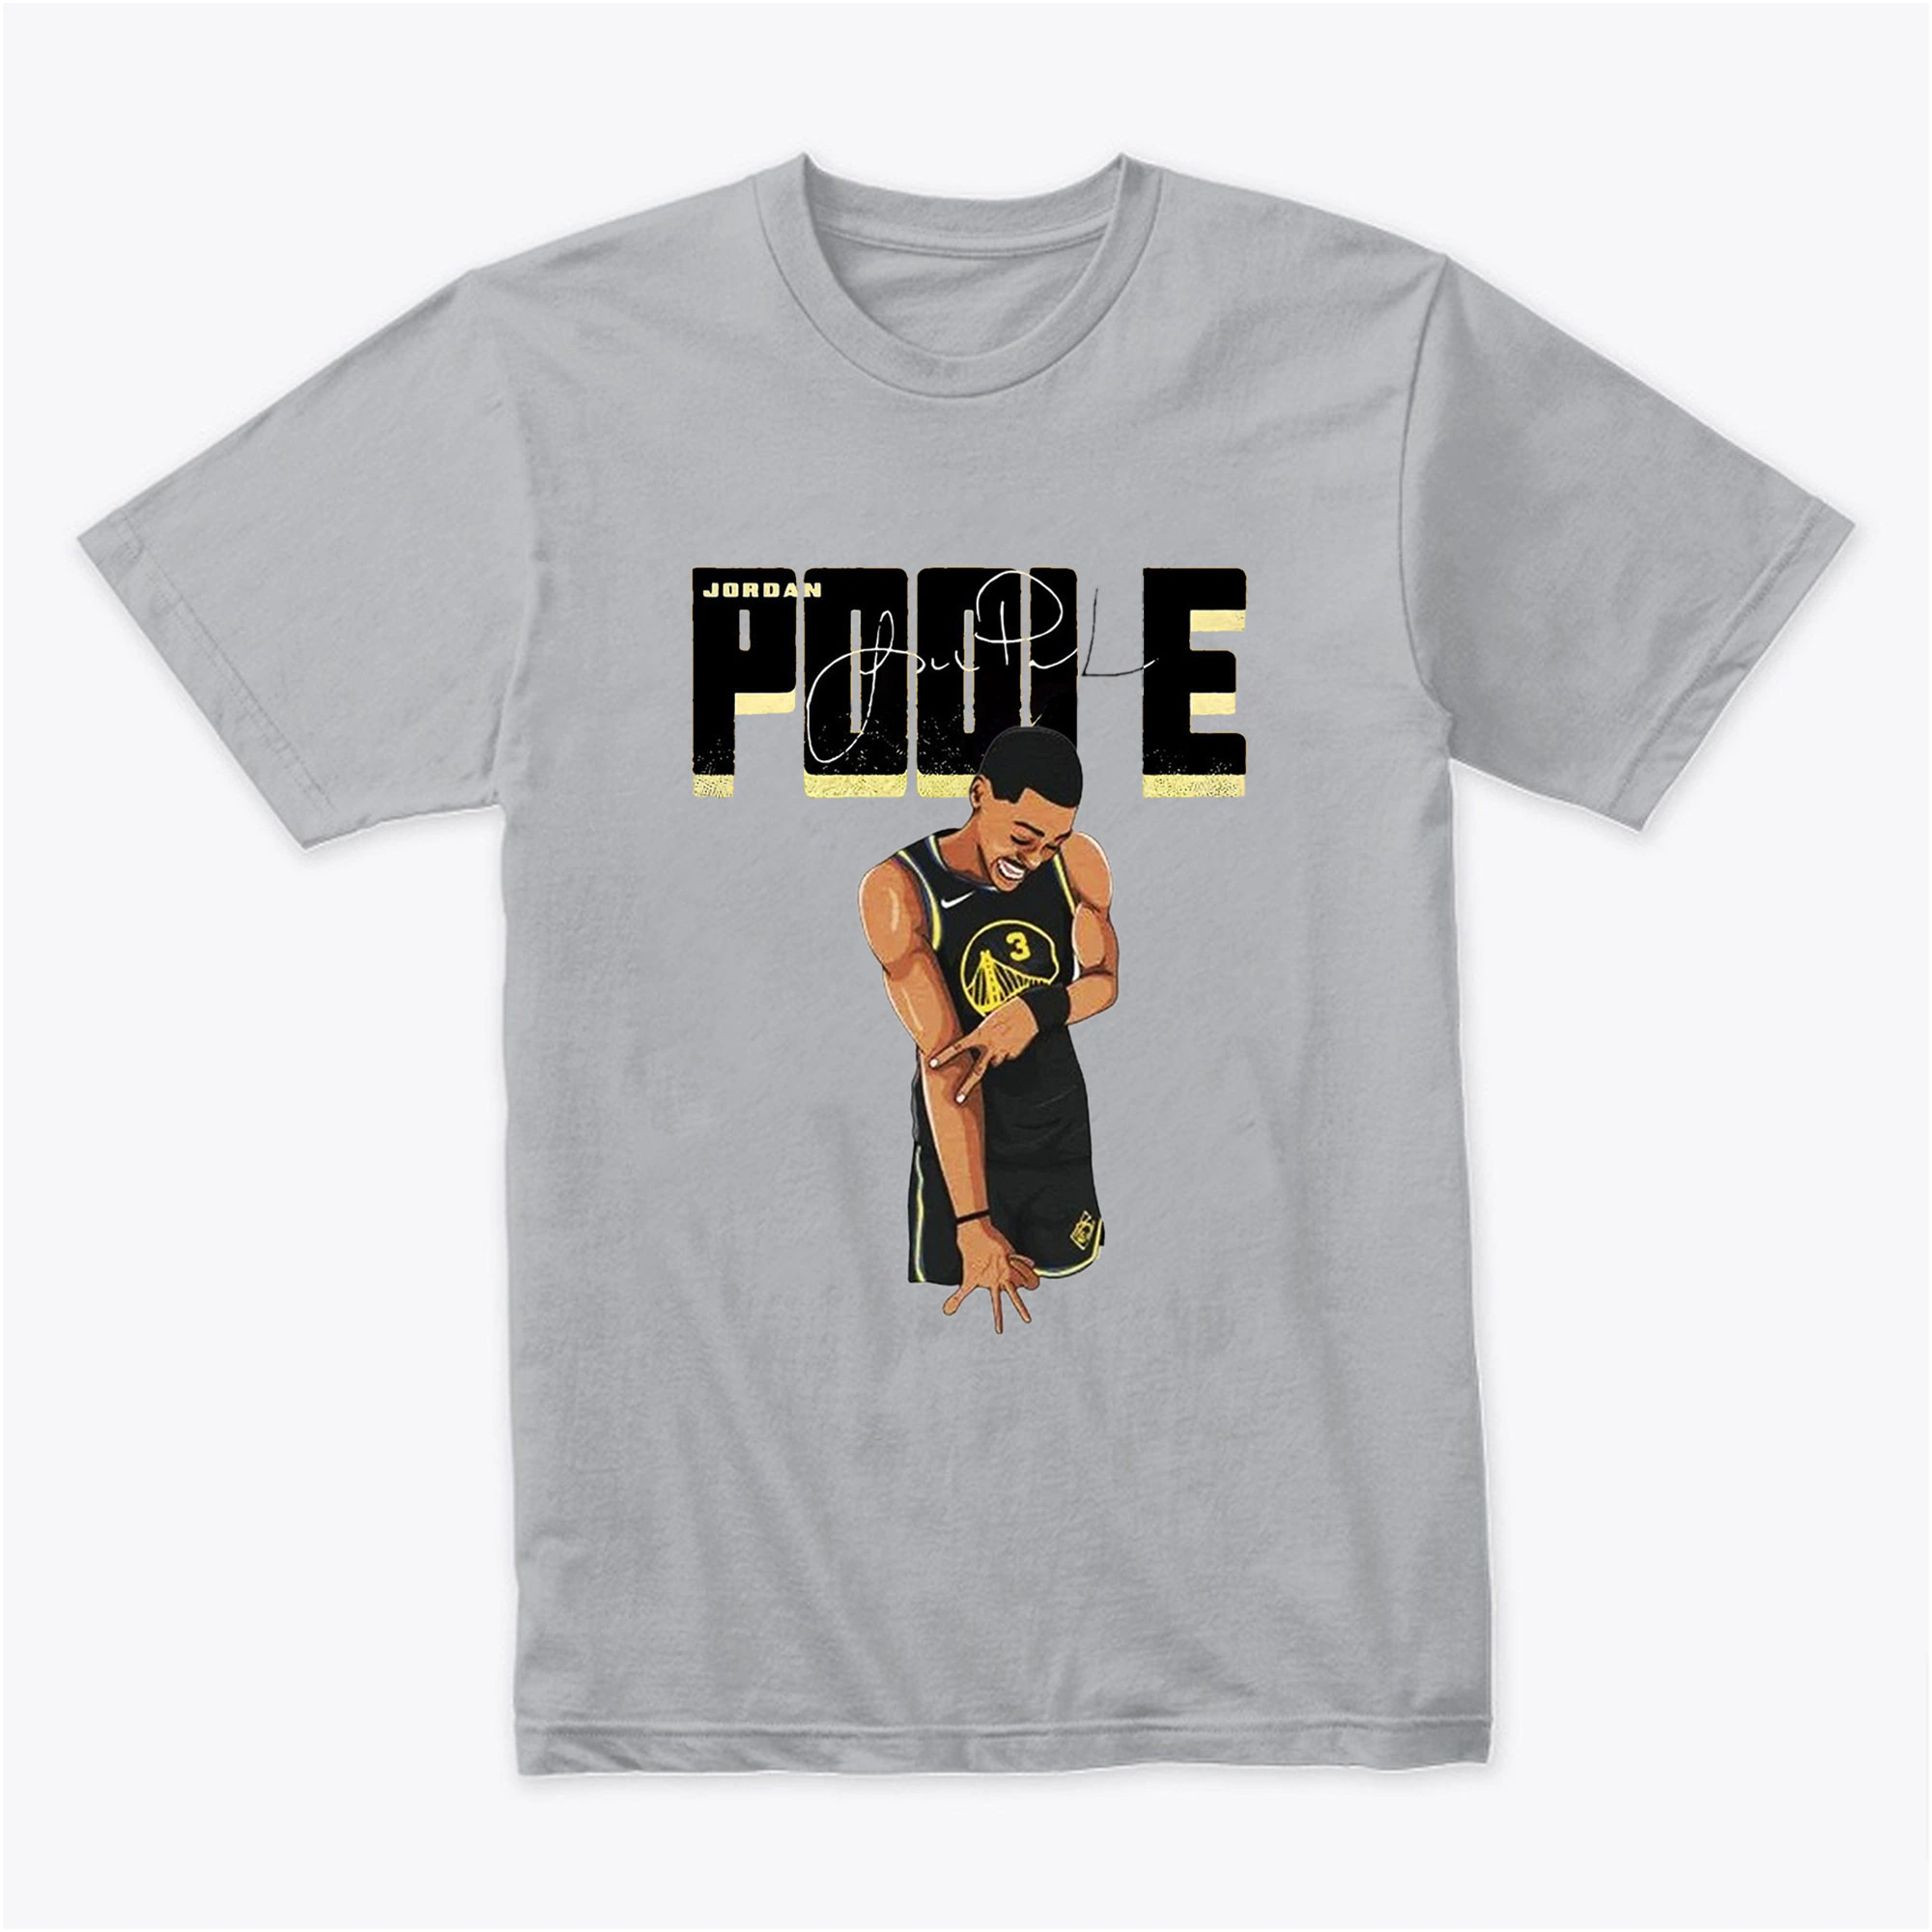 NBA Warrior's Jordan Poole in my brand's sweatshirt! : r/streetwearstartup